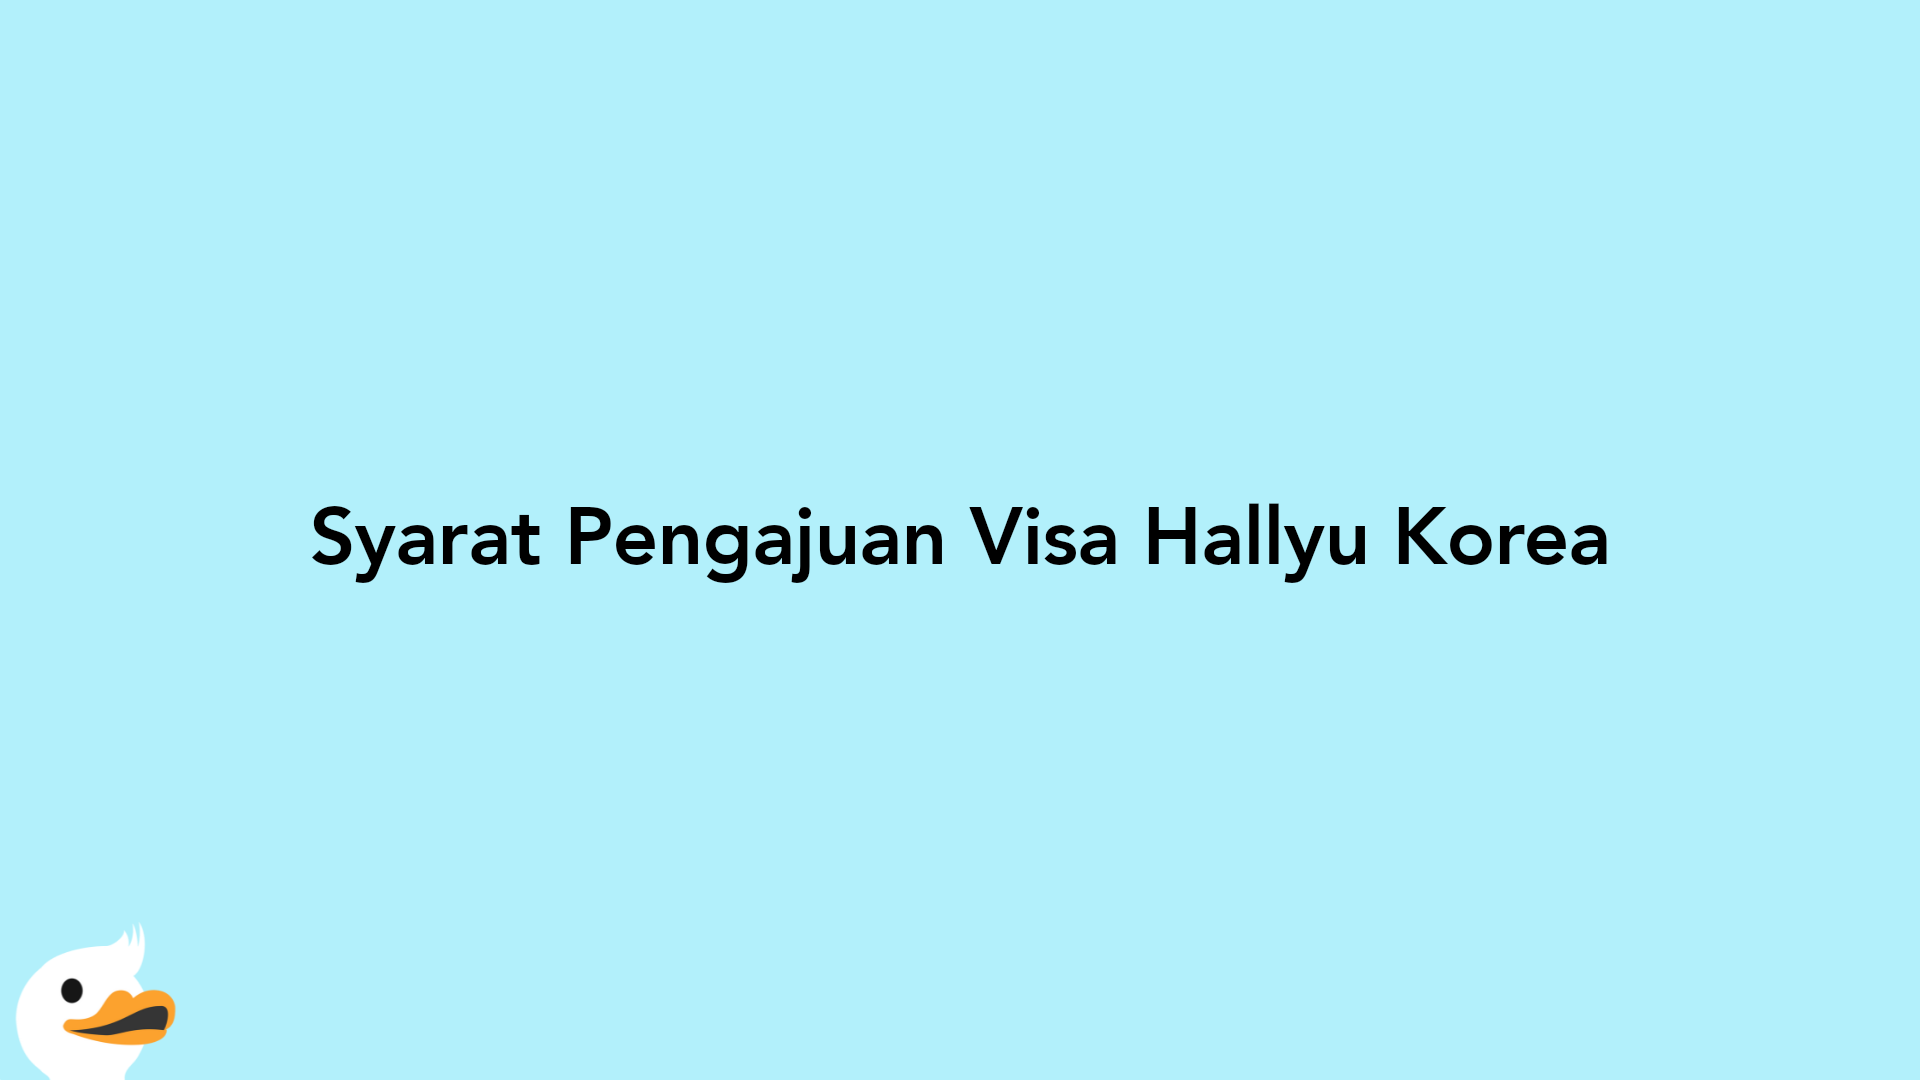 Syarat Pengajuan Visa Hallyu Korea